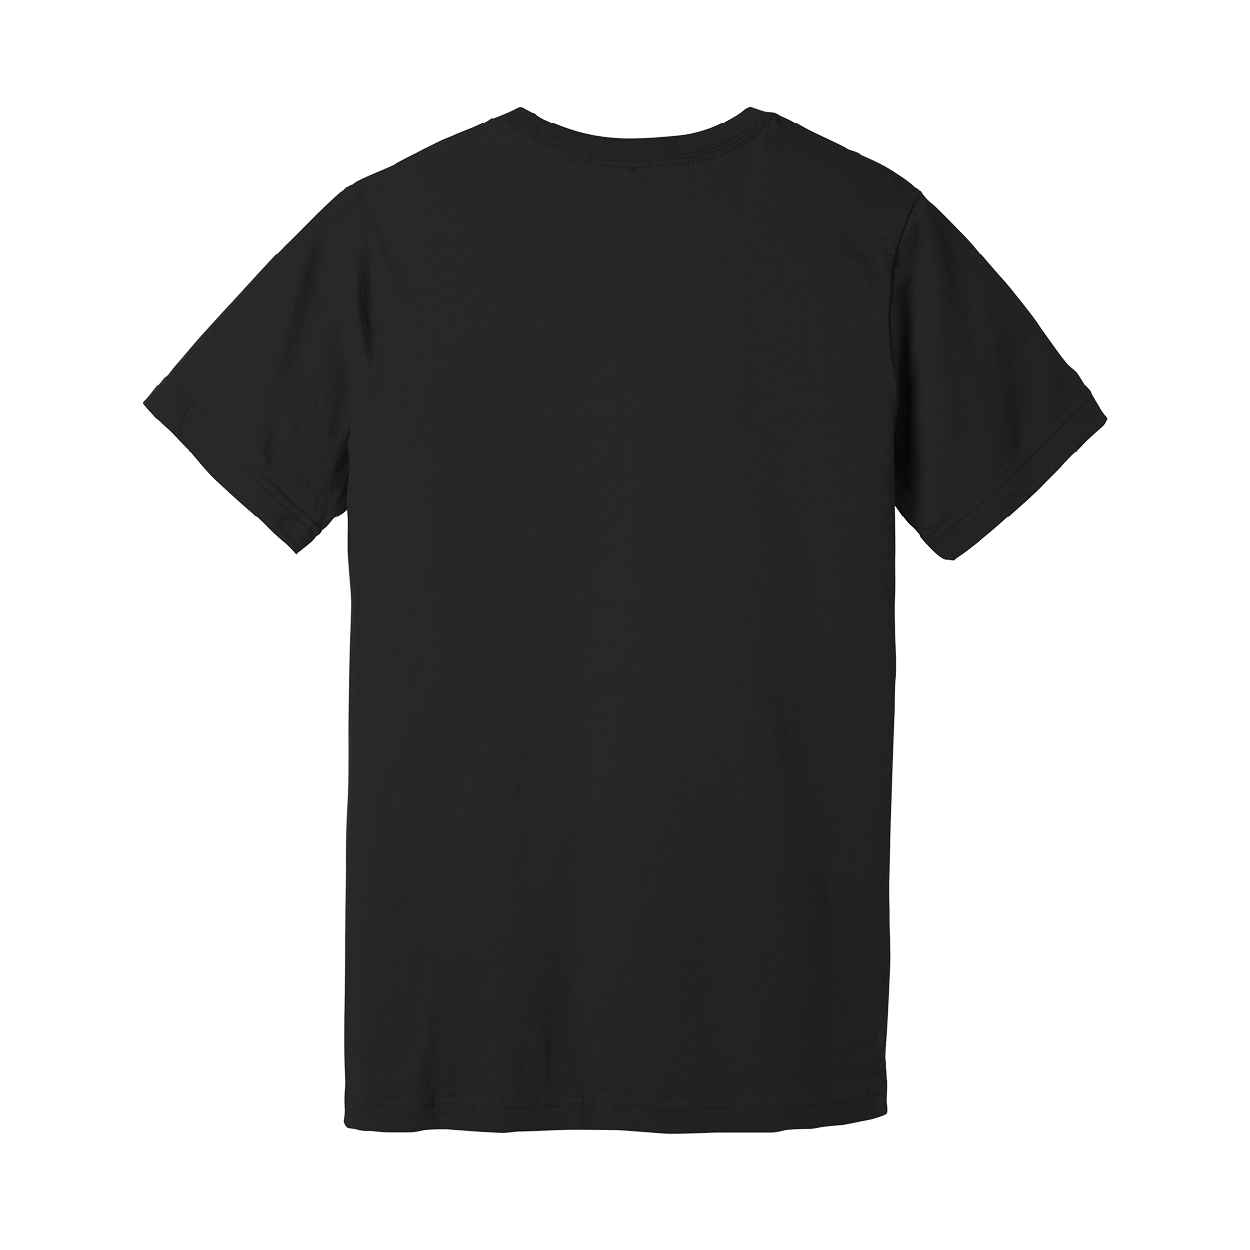 JHerbalTeas Black T-Shirt